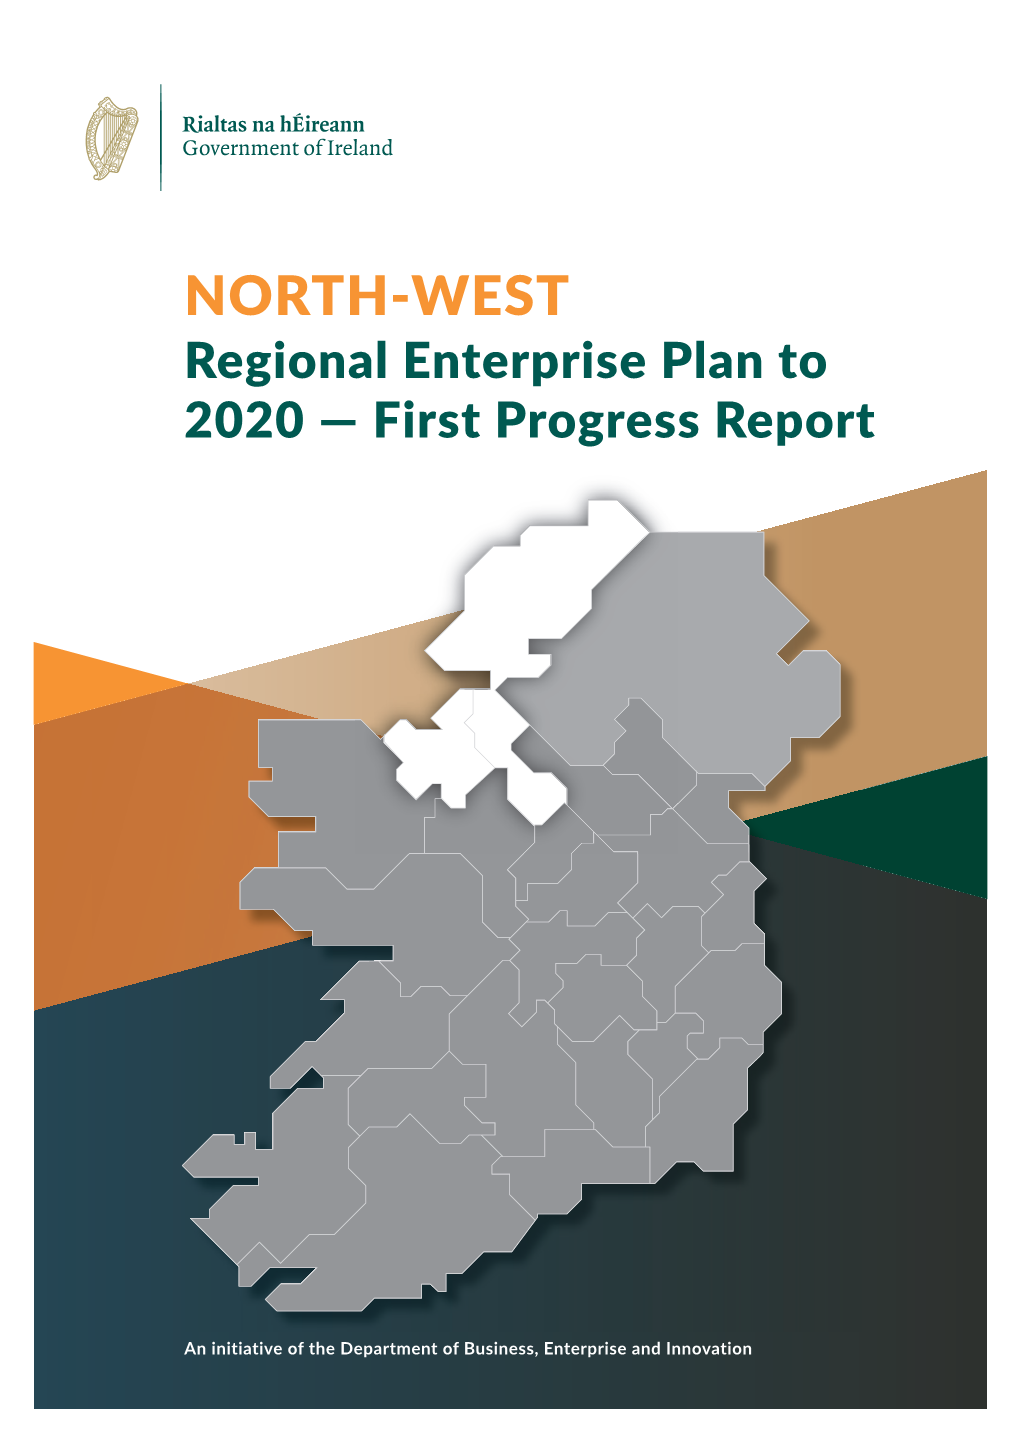 North-West Regional Enterprise Plan First Progress Report